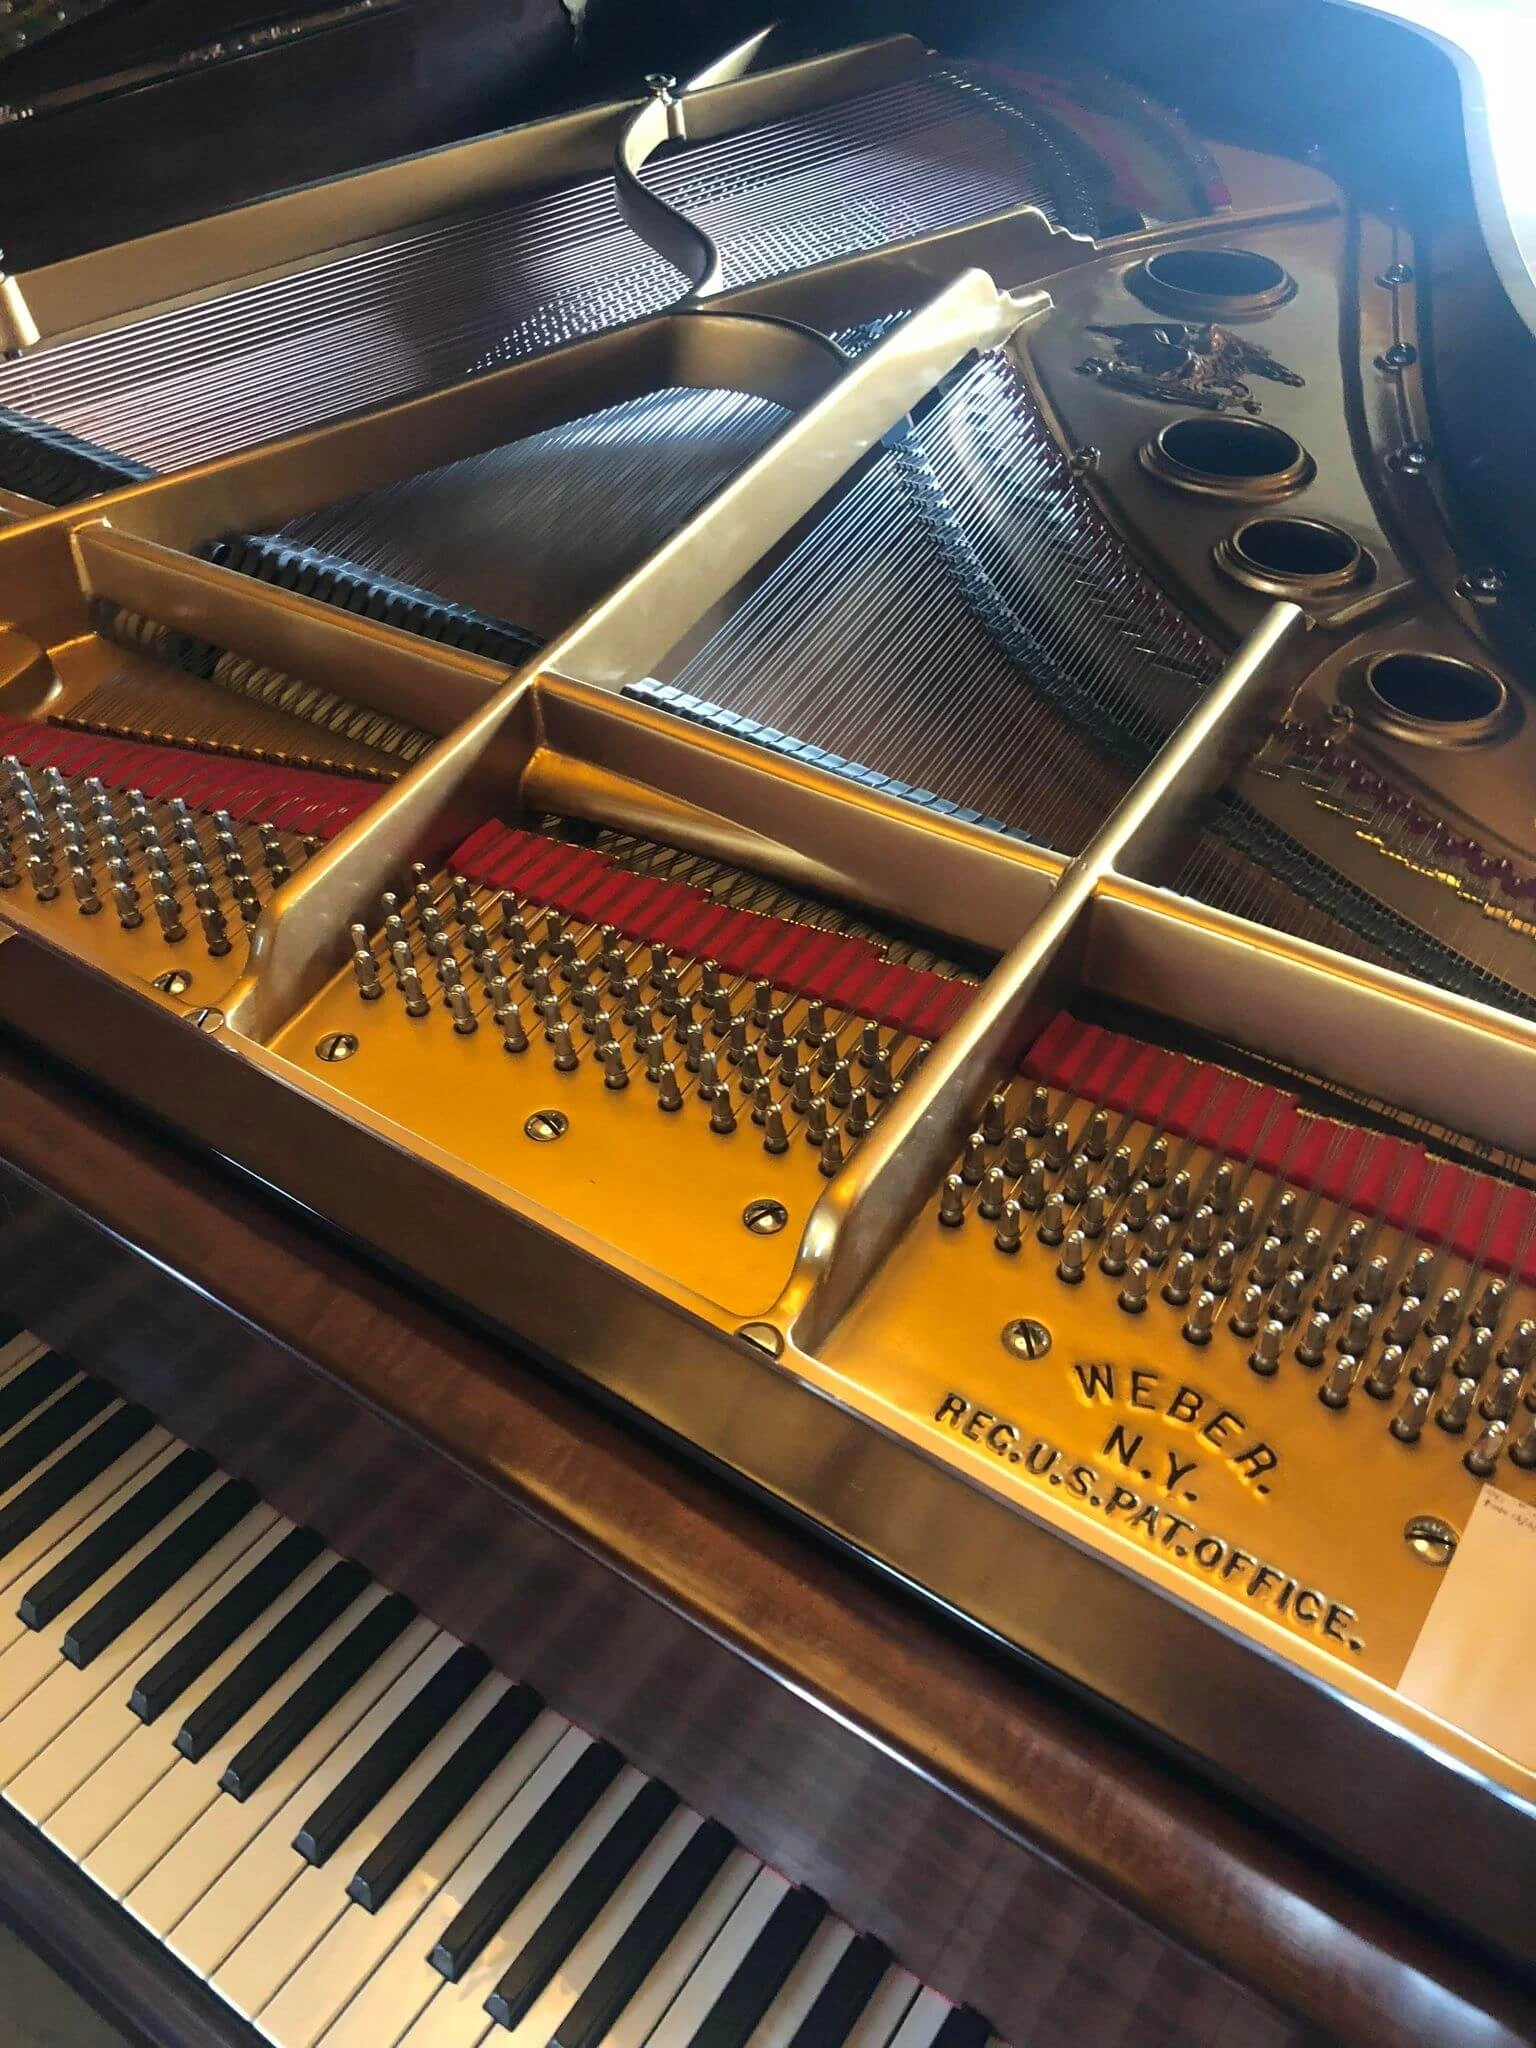 Rebuilt Weber grand piano